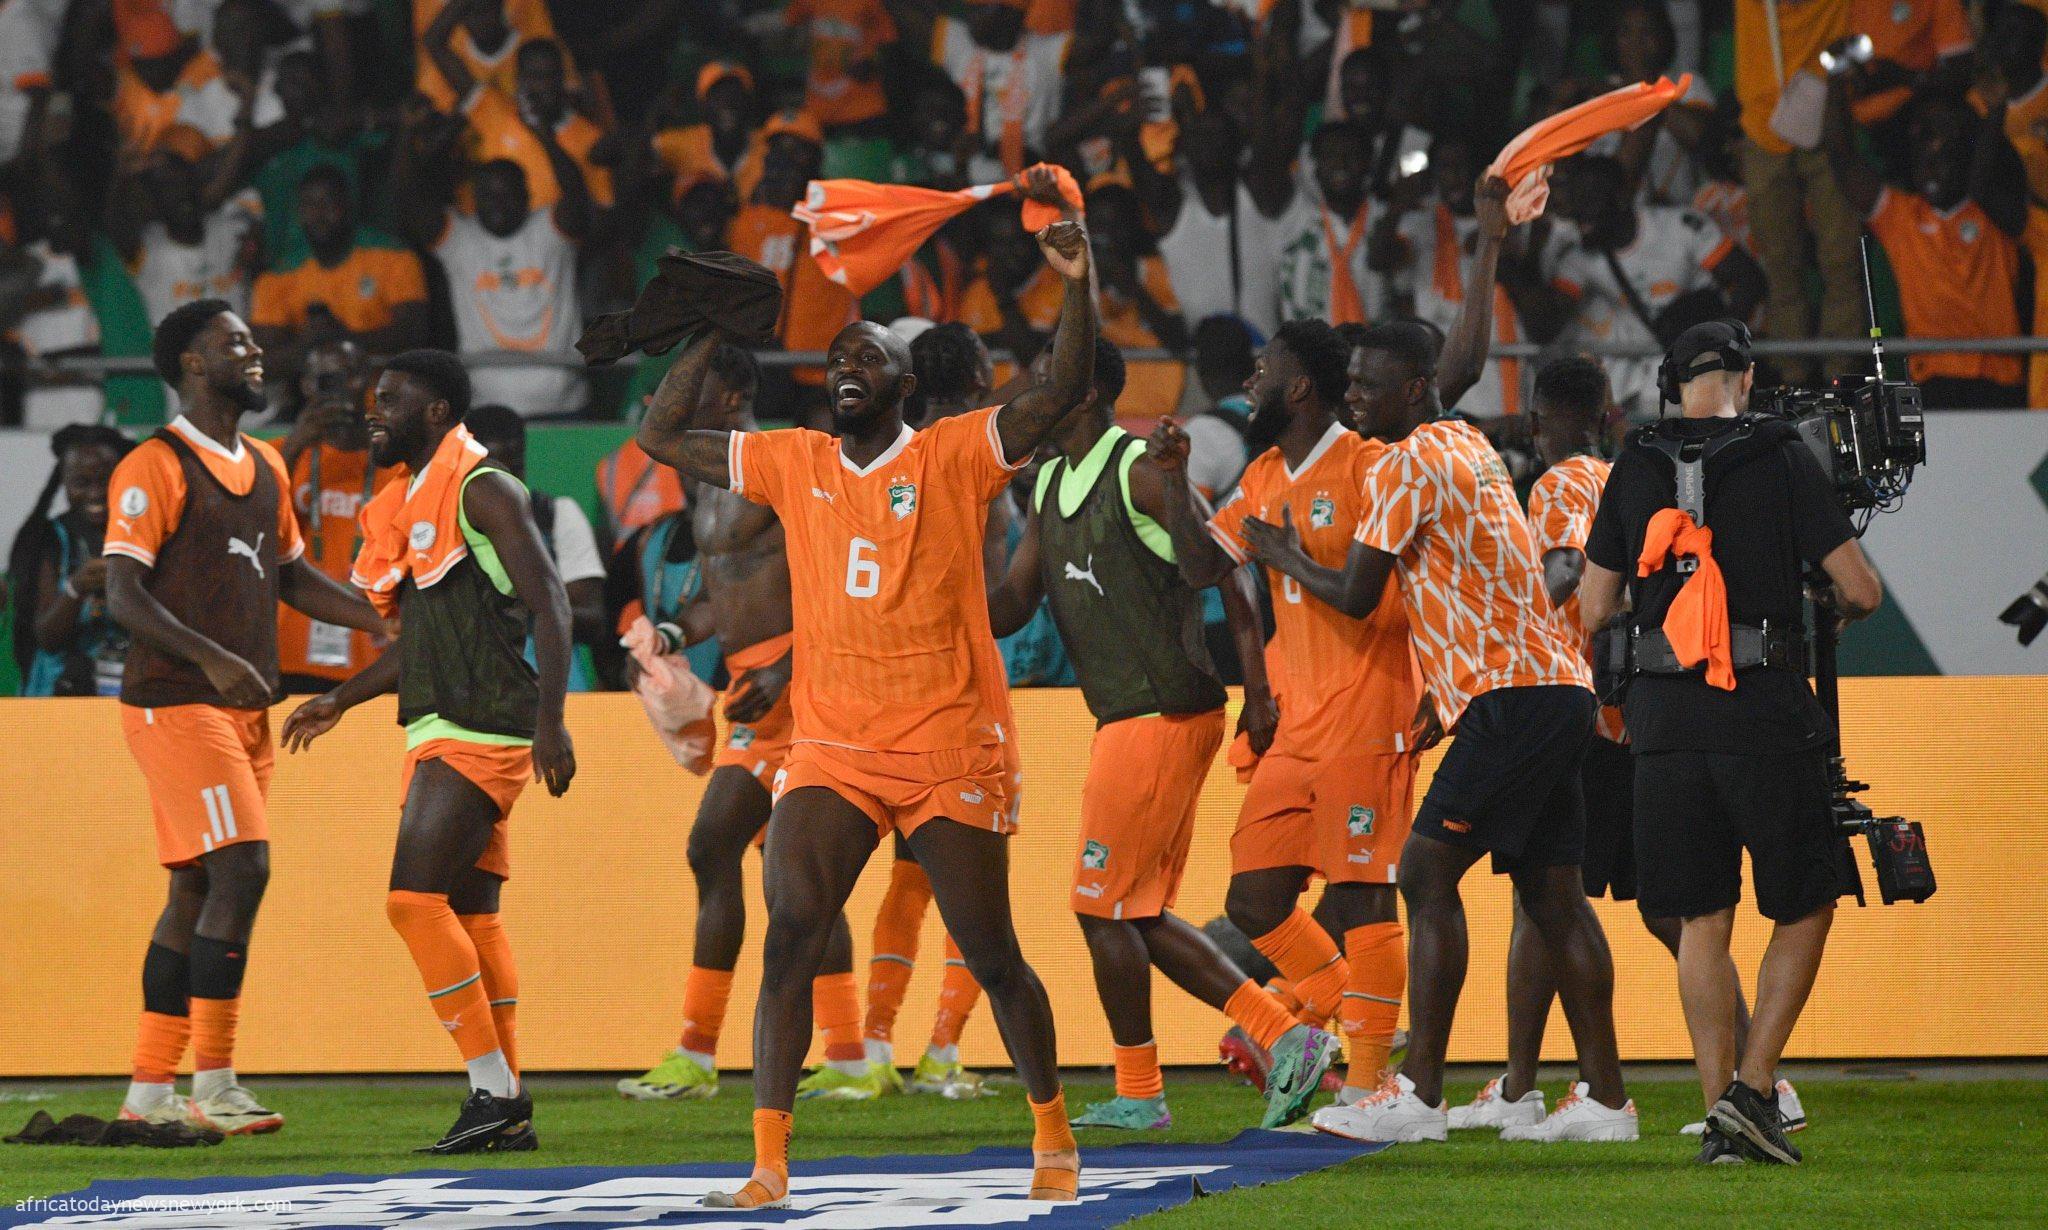 AFCON Cote d’Ivoire, South Africa Reach Semi-Final